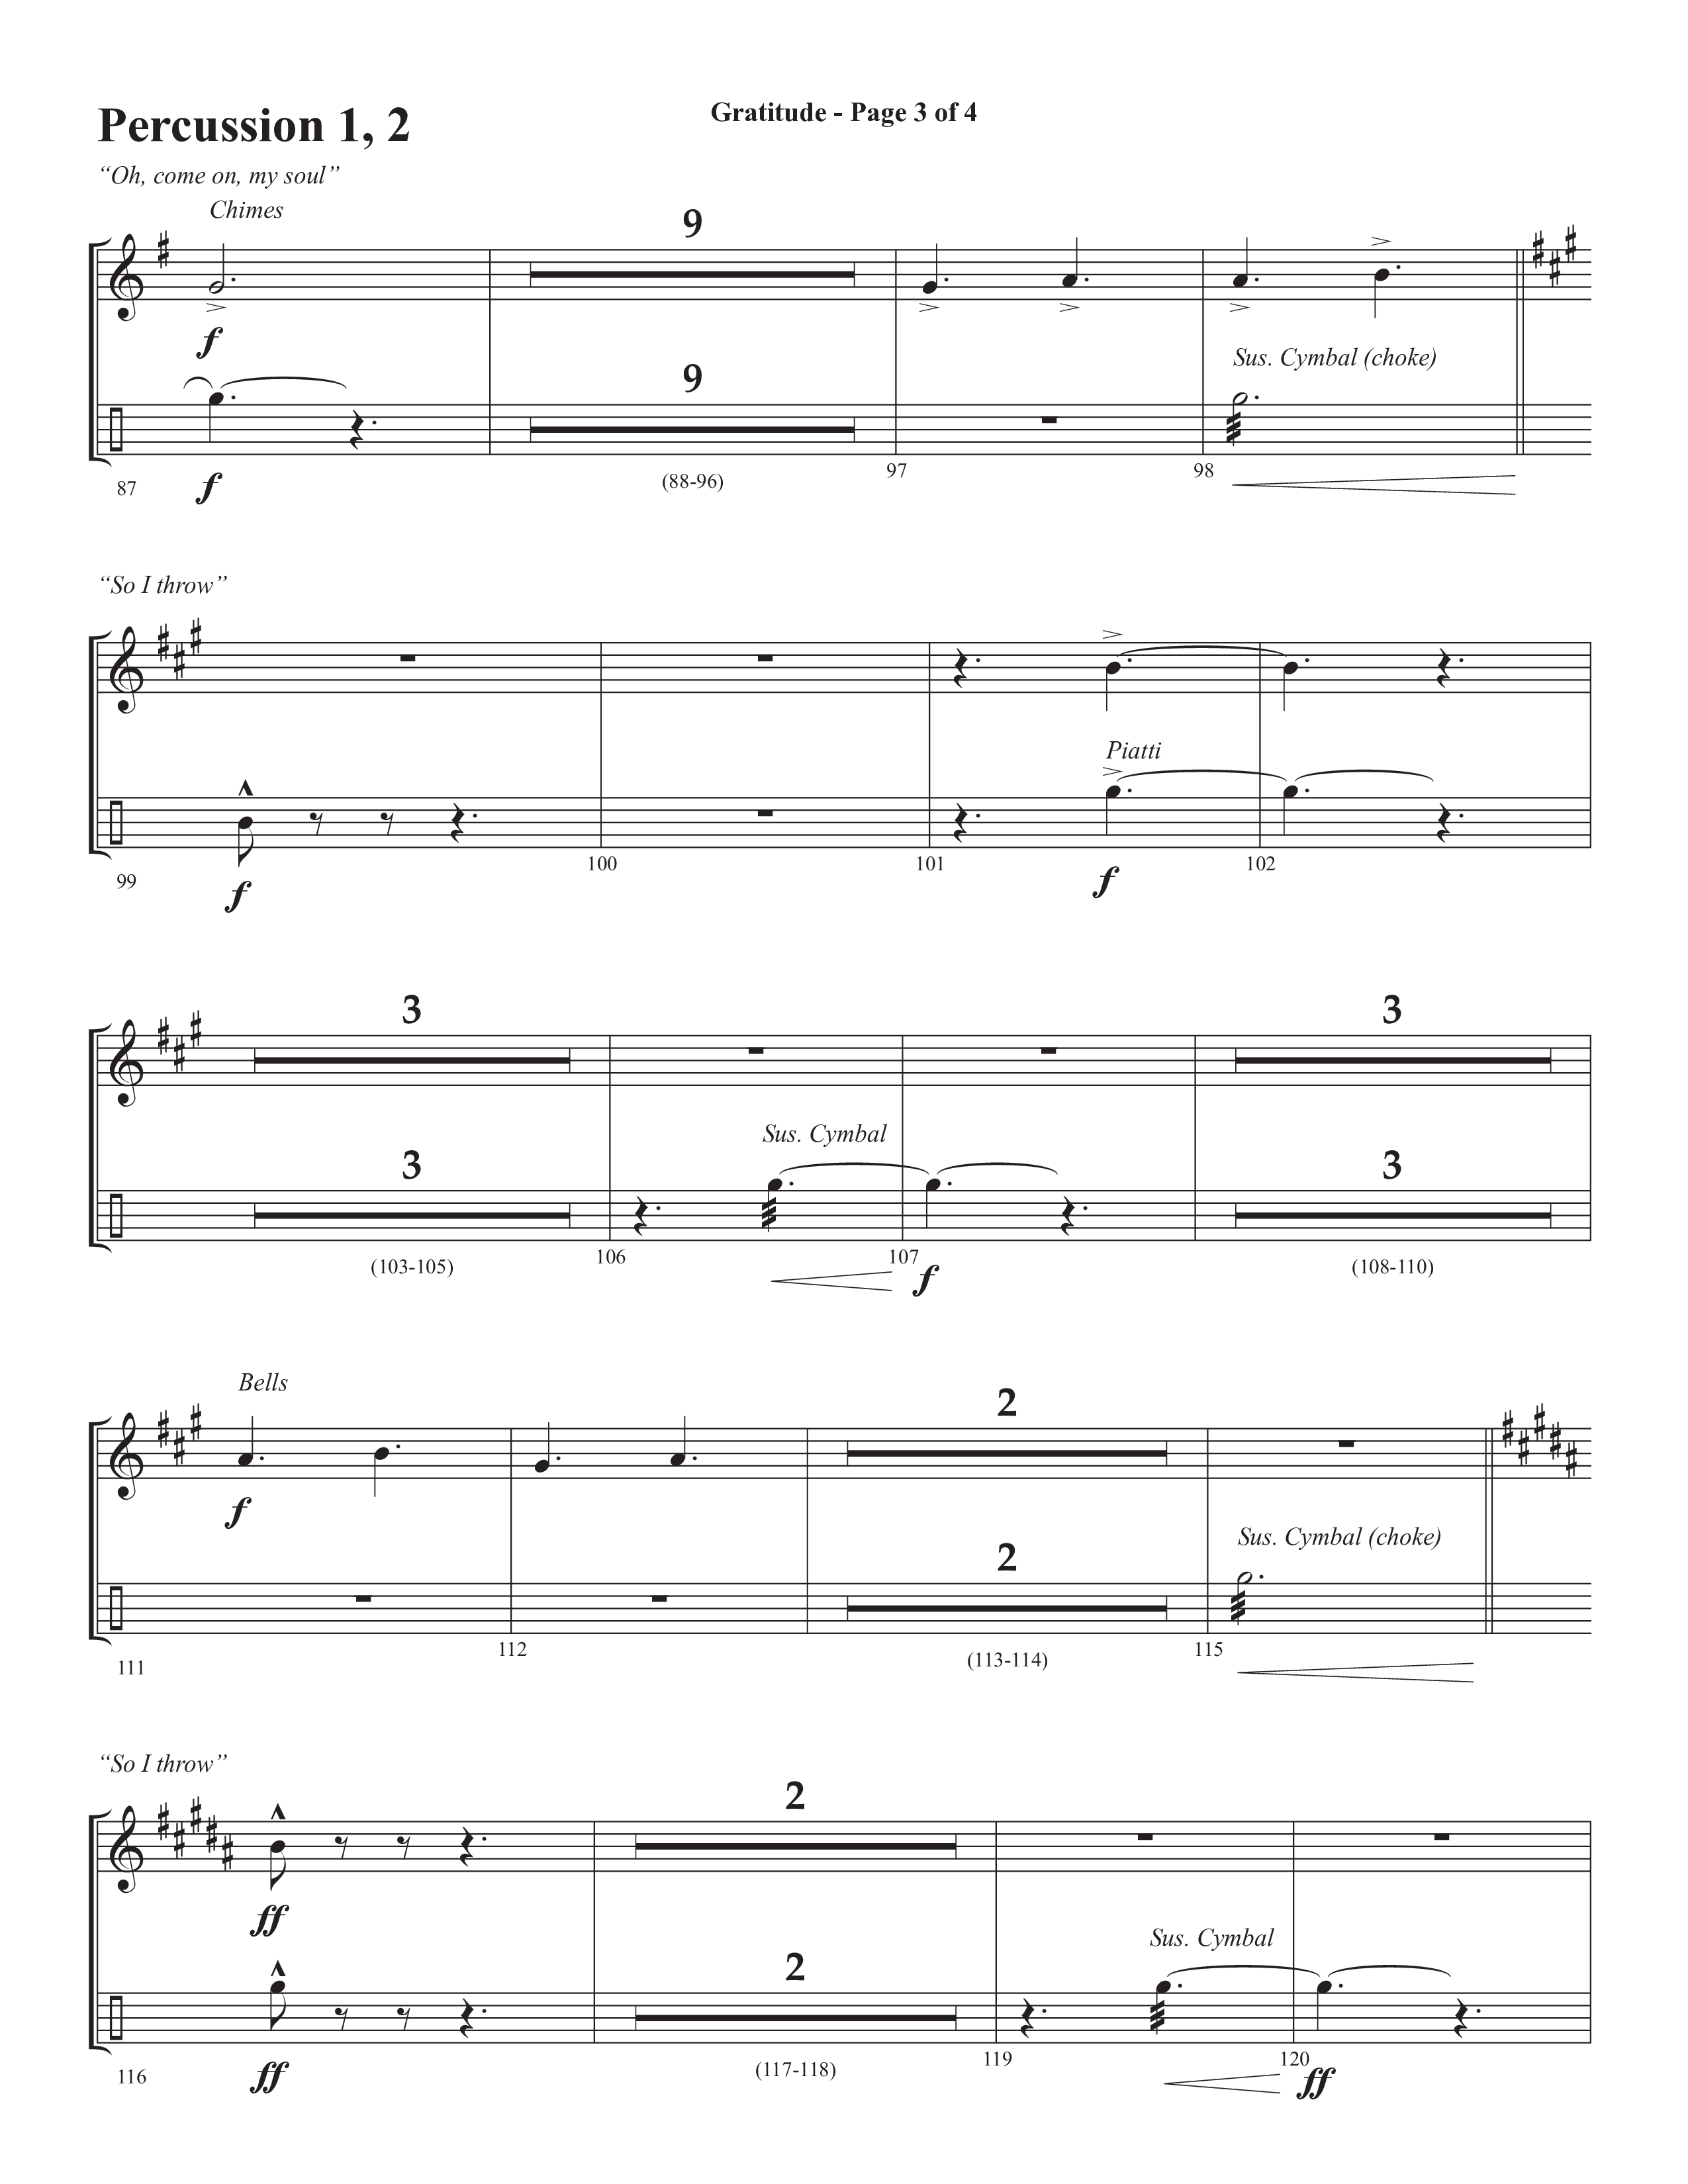 Gratitude (Choral Anthem SATB) Percussion 1/2 (Semsen Music / Arr. John Bolin / Orch. Cliff Duren)